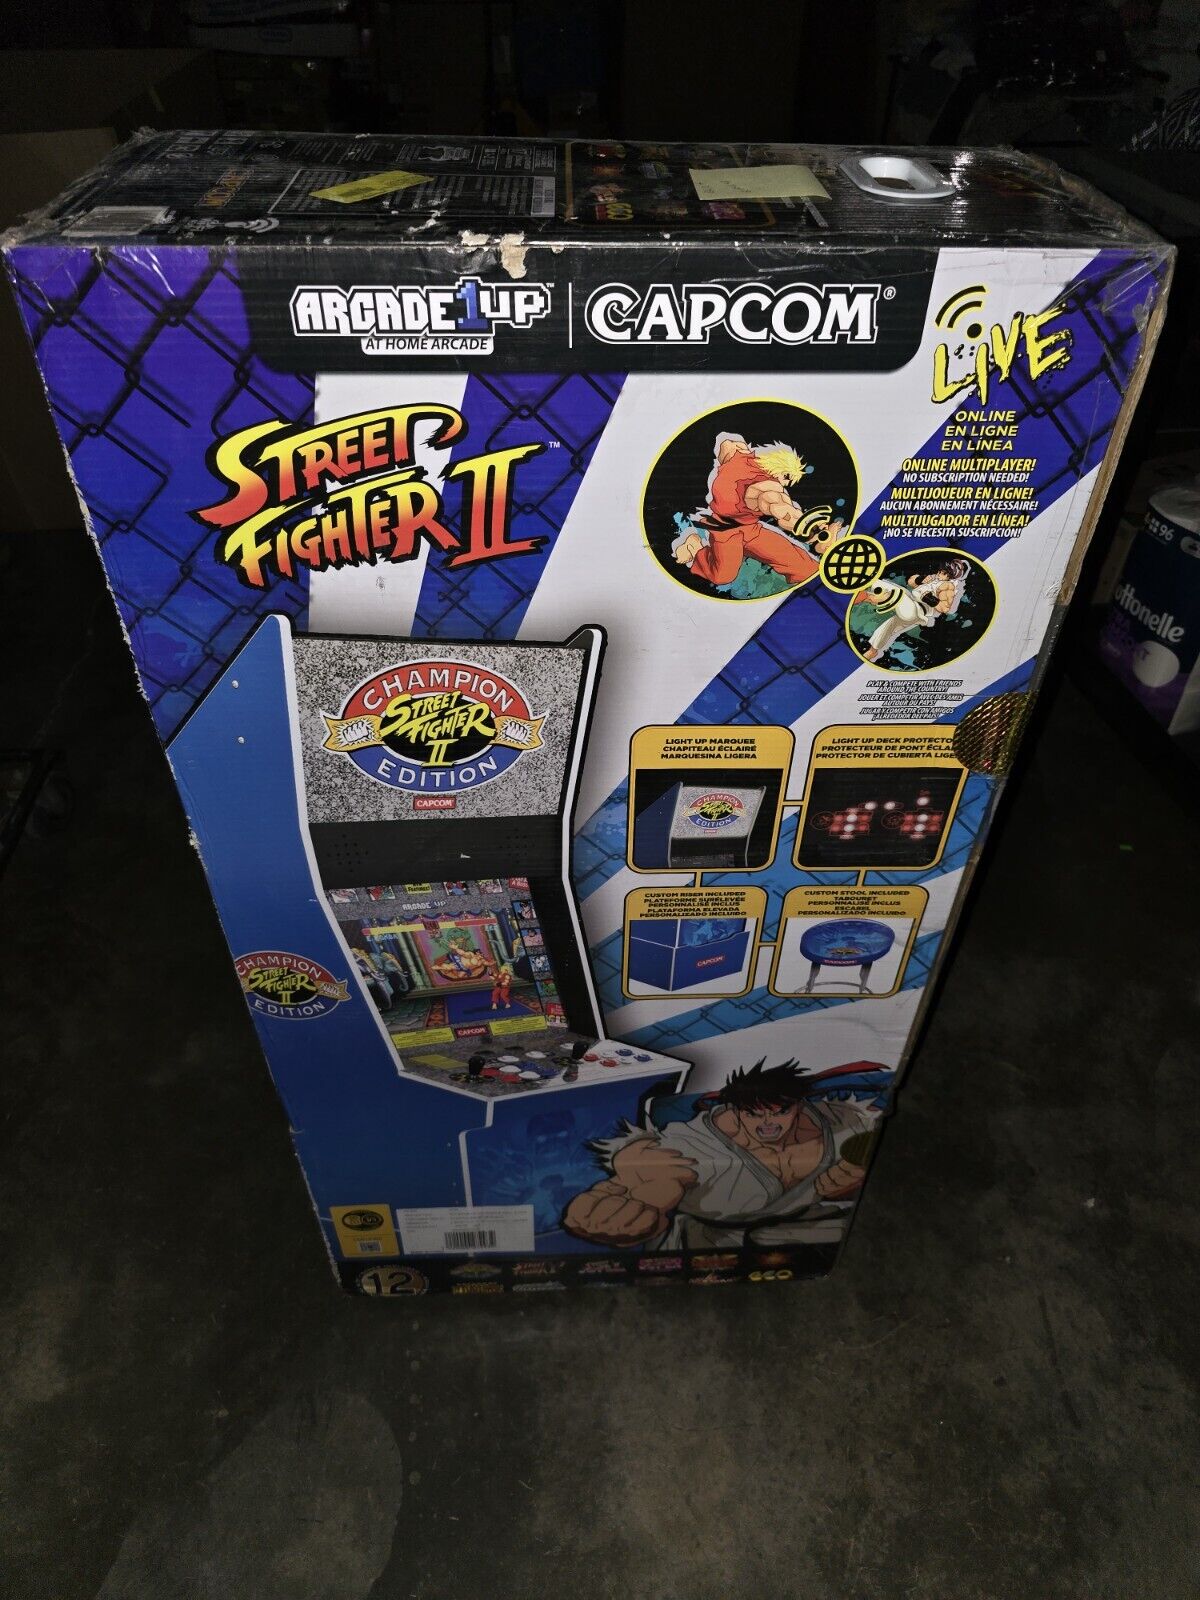 Capcom Arcade 1up Street Fighter 2 Championship Edition Home Arcade